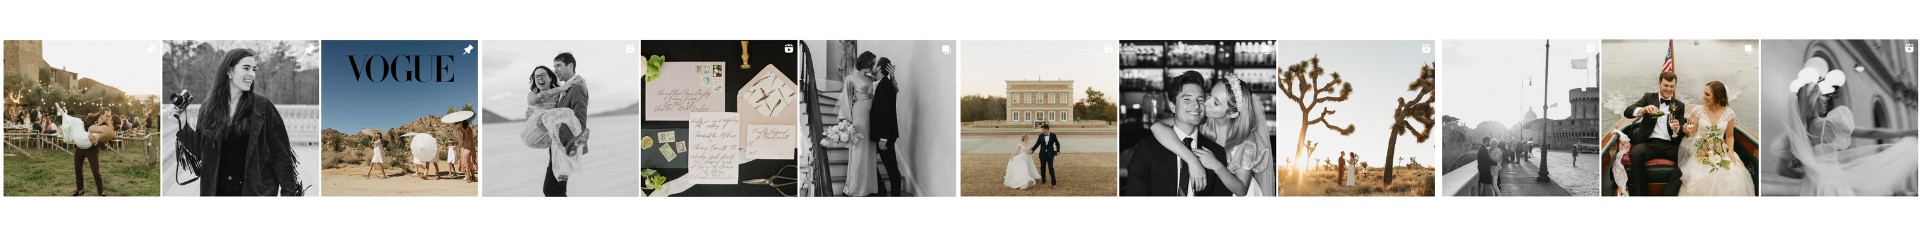 Miami wedding photographers instagram journey of destination elopements 